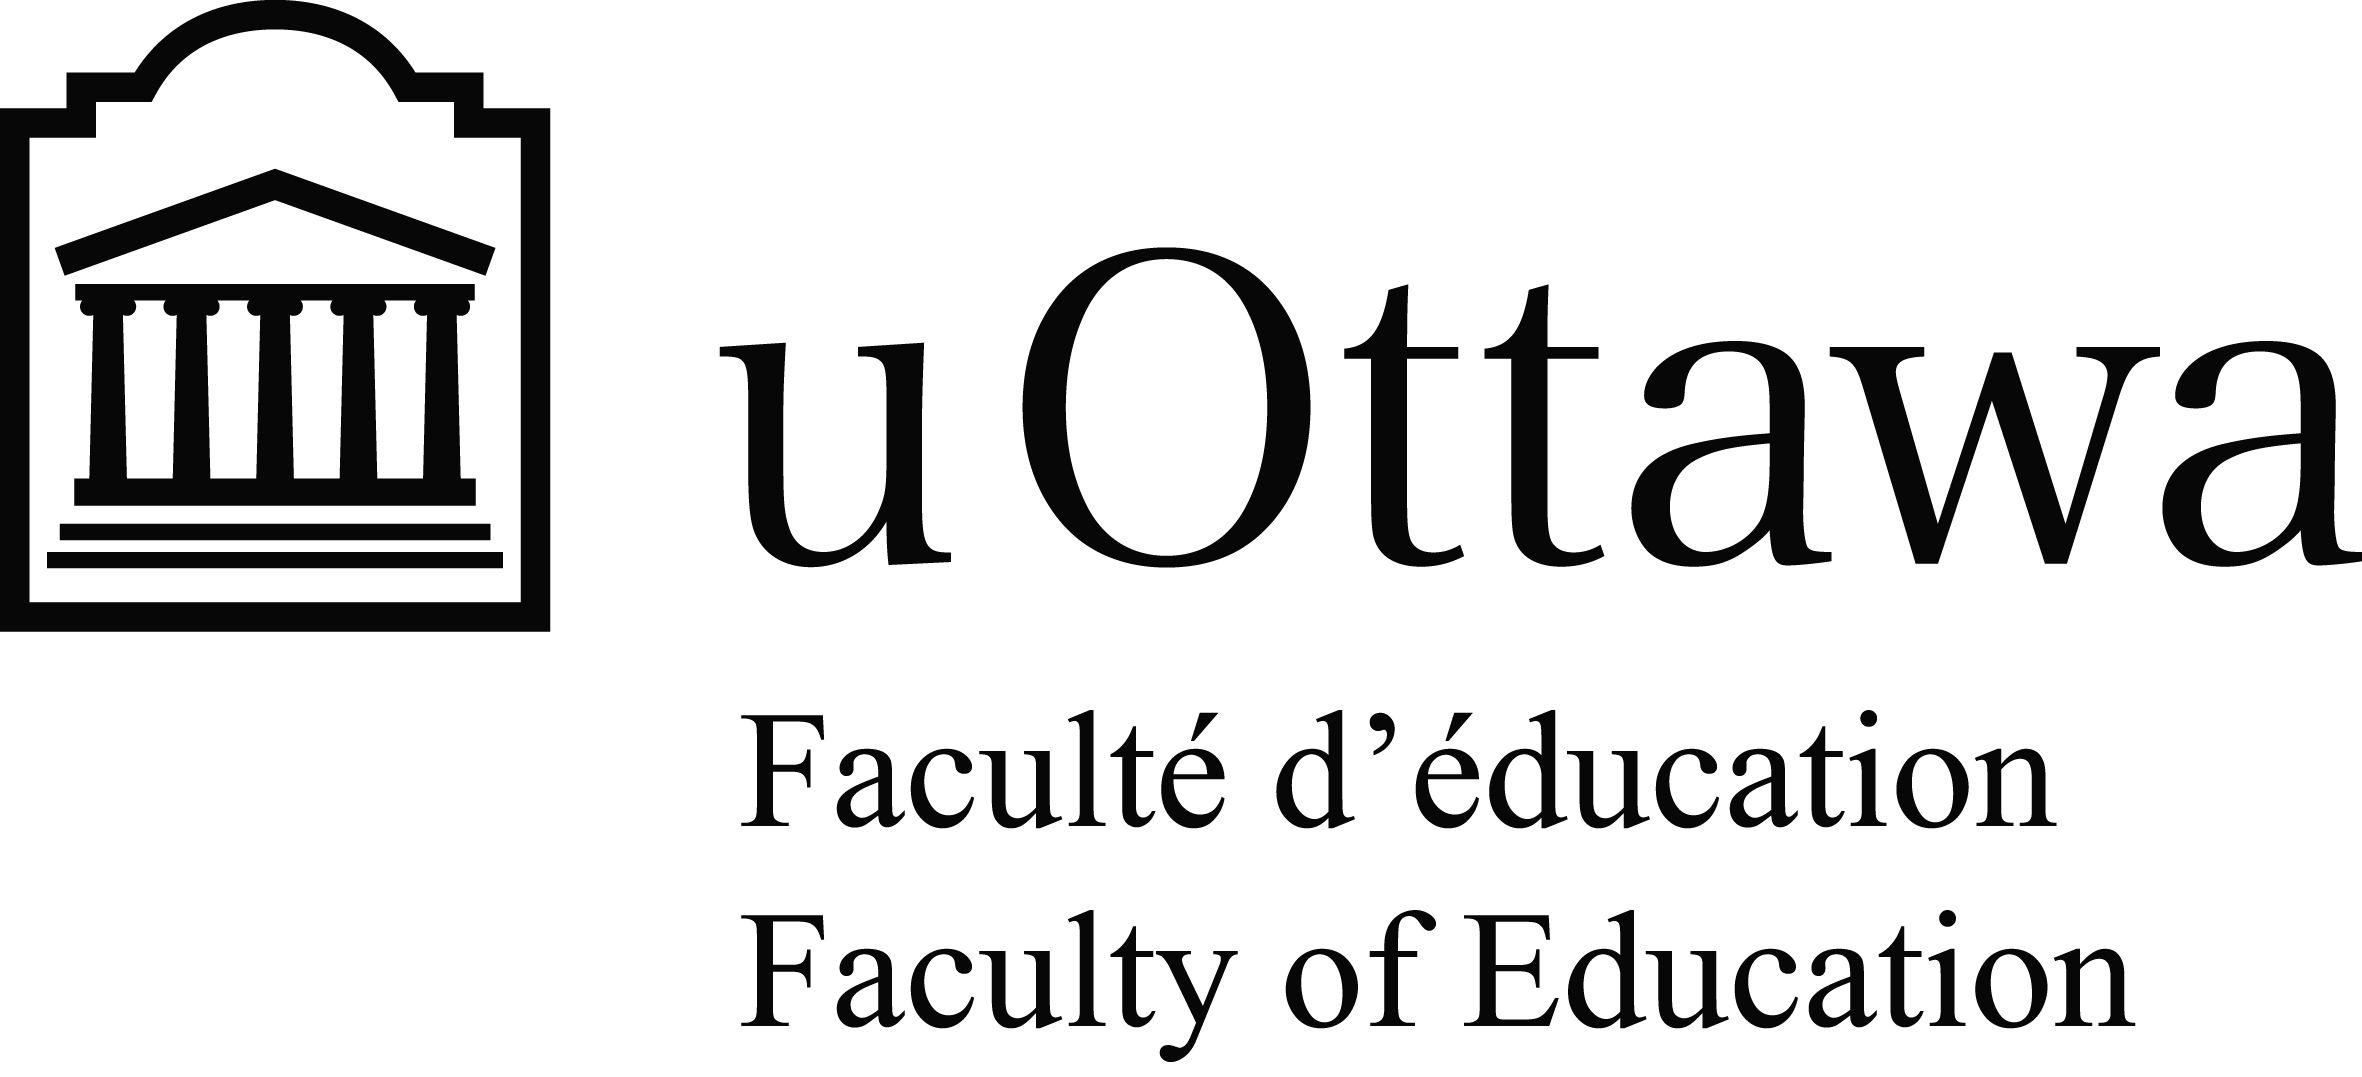 U of O Logo - Logos and templates | Faculty of Education | University of Ottawa